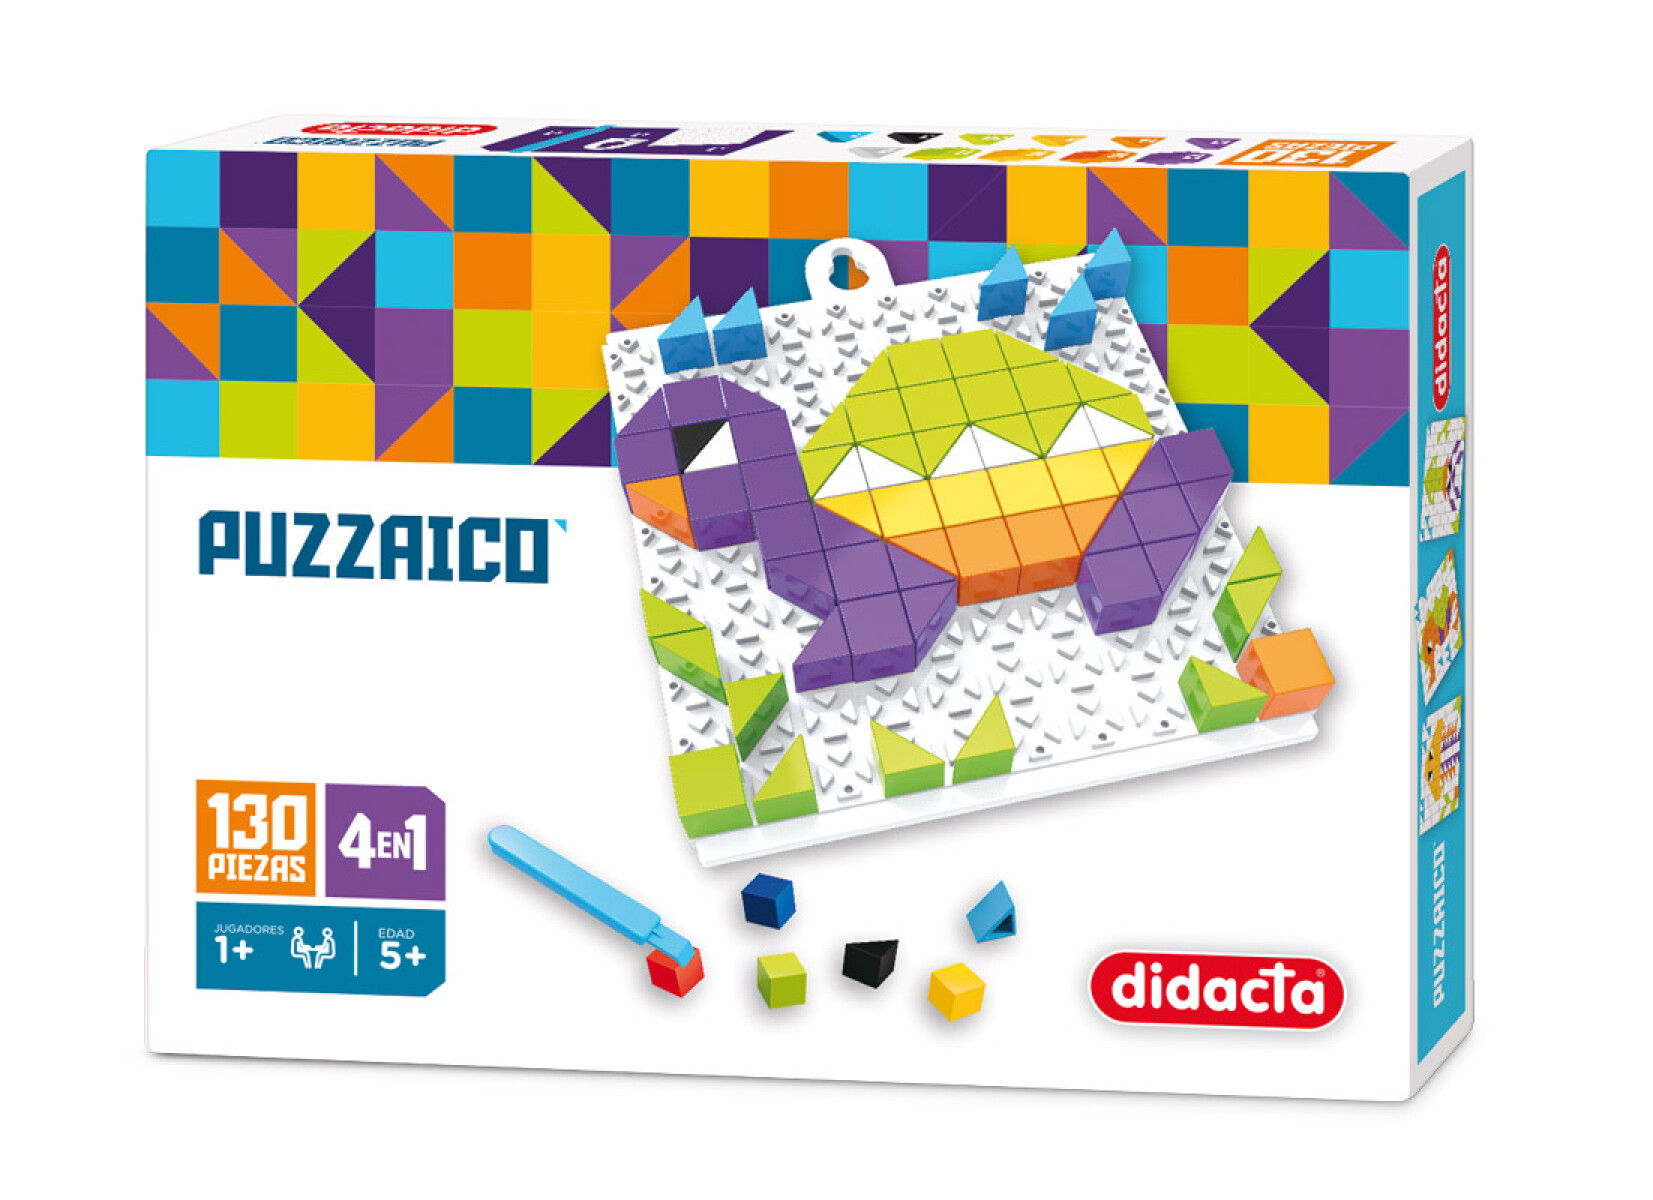 Puzzle Encastrable Didacta Puzzaico Tortuga - 001 